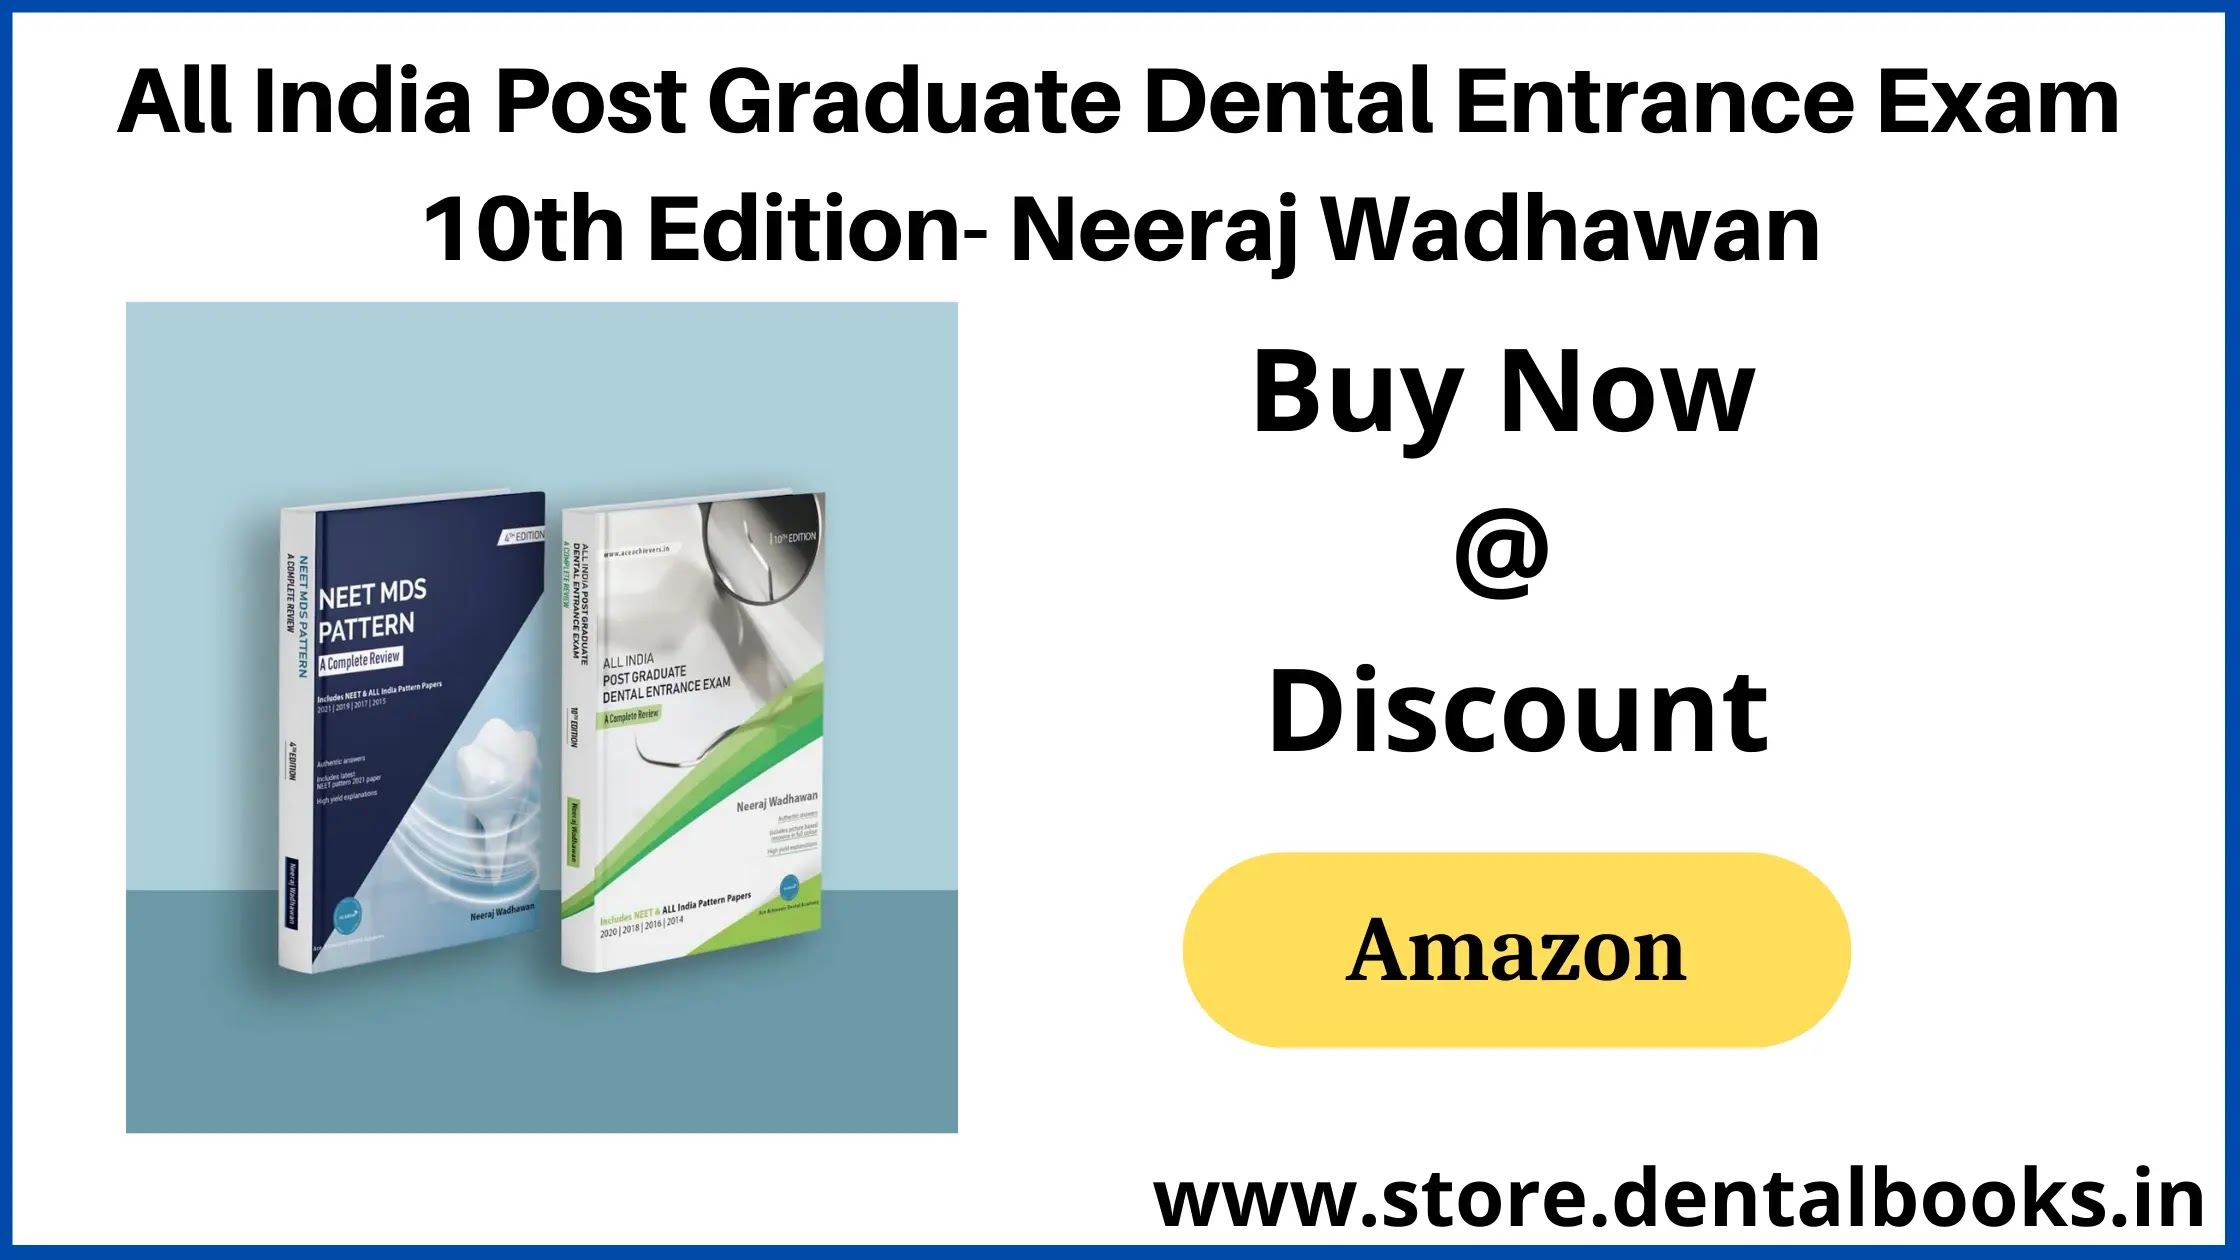 All India Post Graduate Dental Entrance Exam 10 Edition- Neeraj Wadhawan